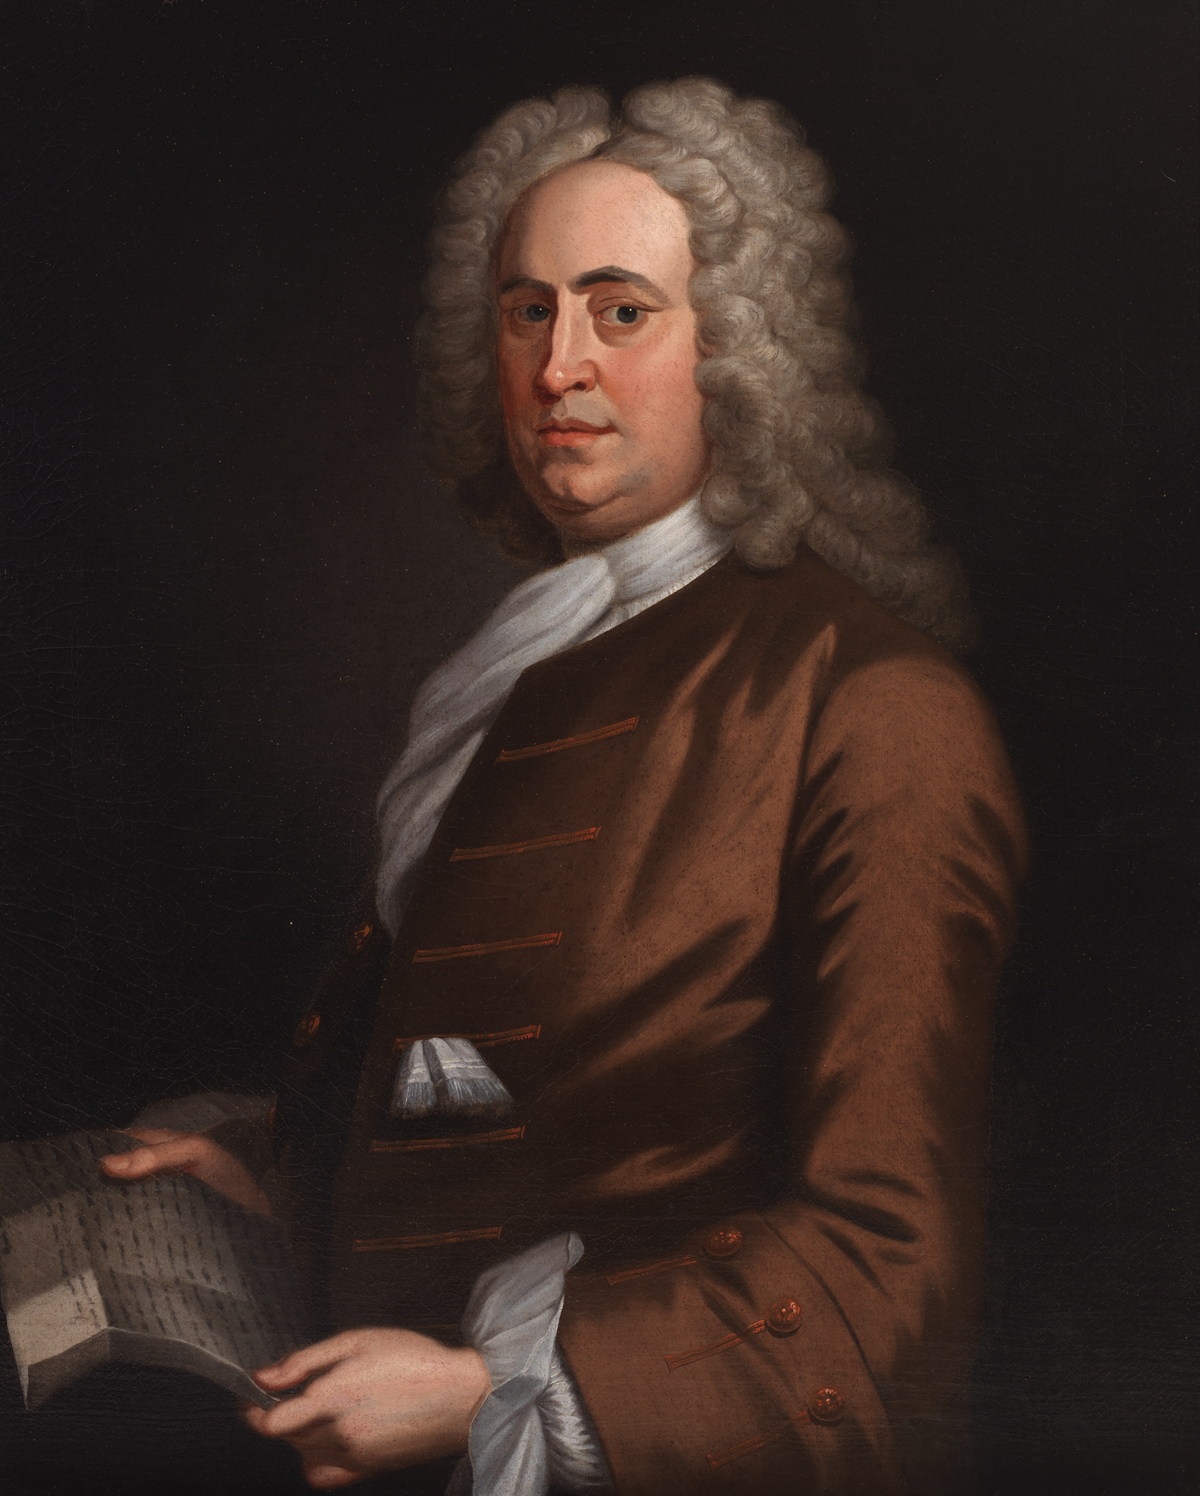 William Randolph II of Turkey Island, 1755, by John Wollaston